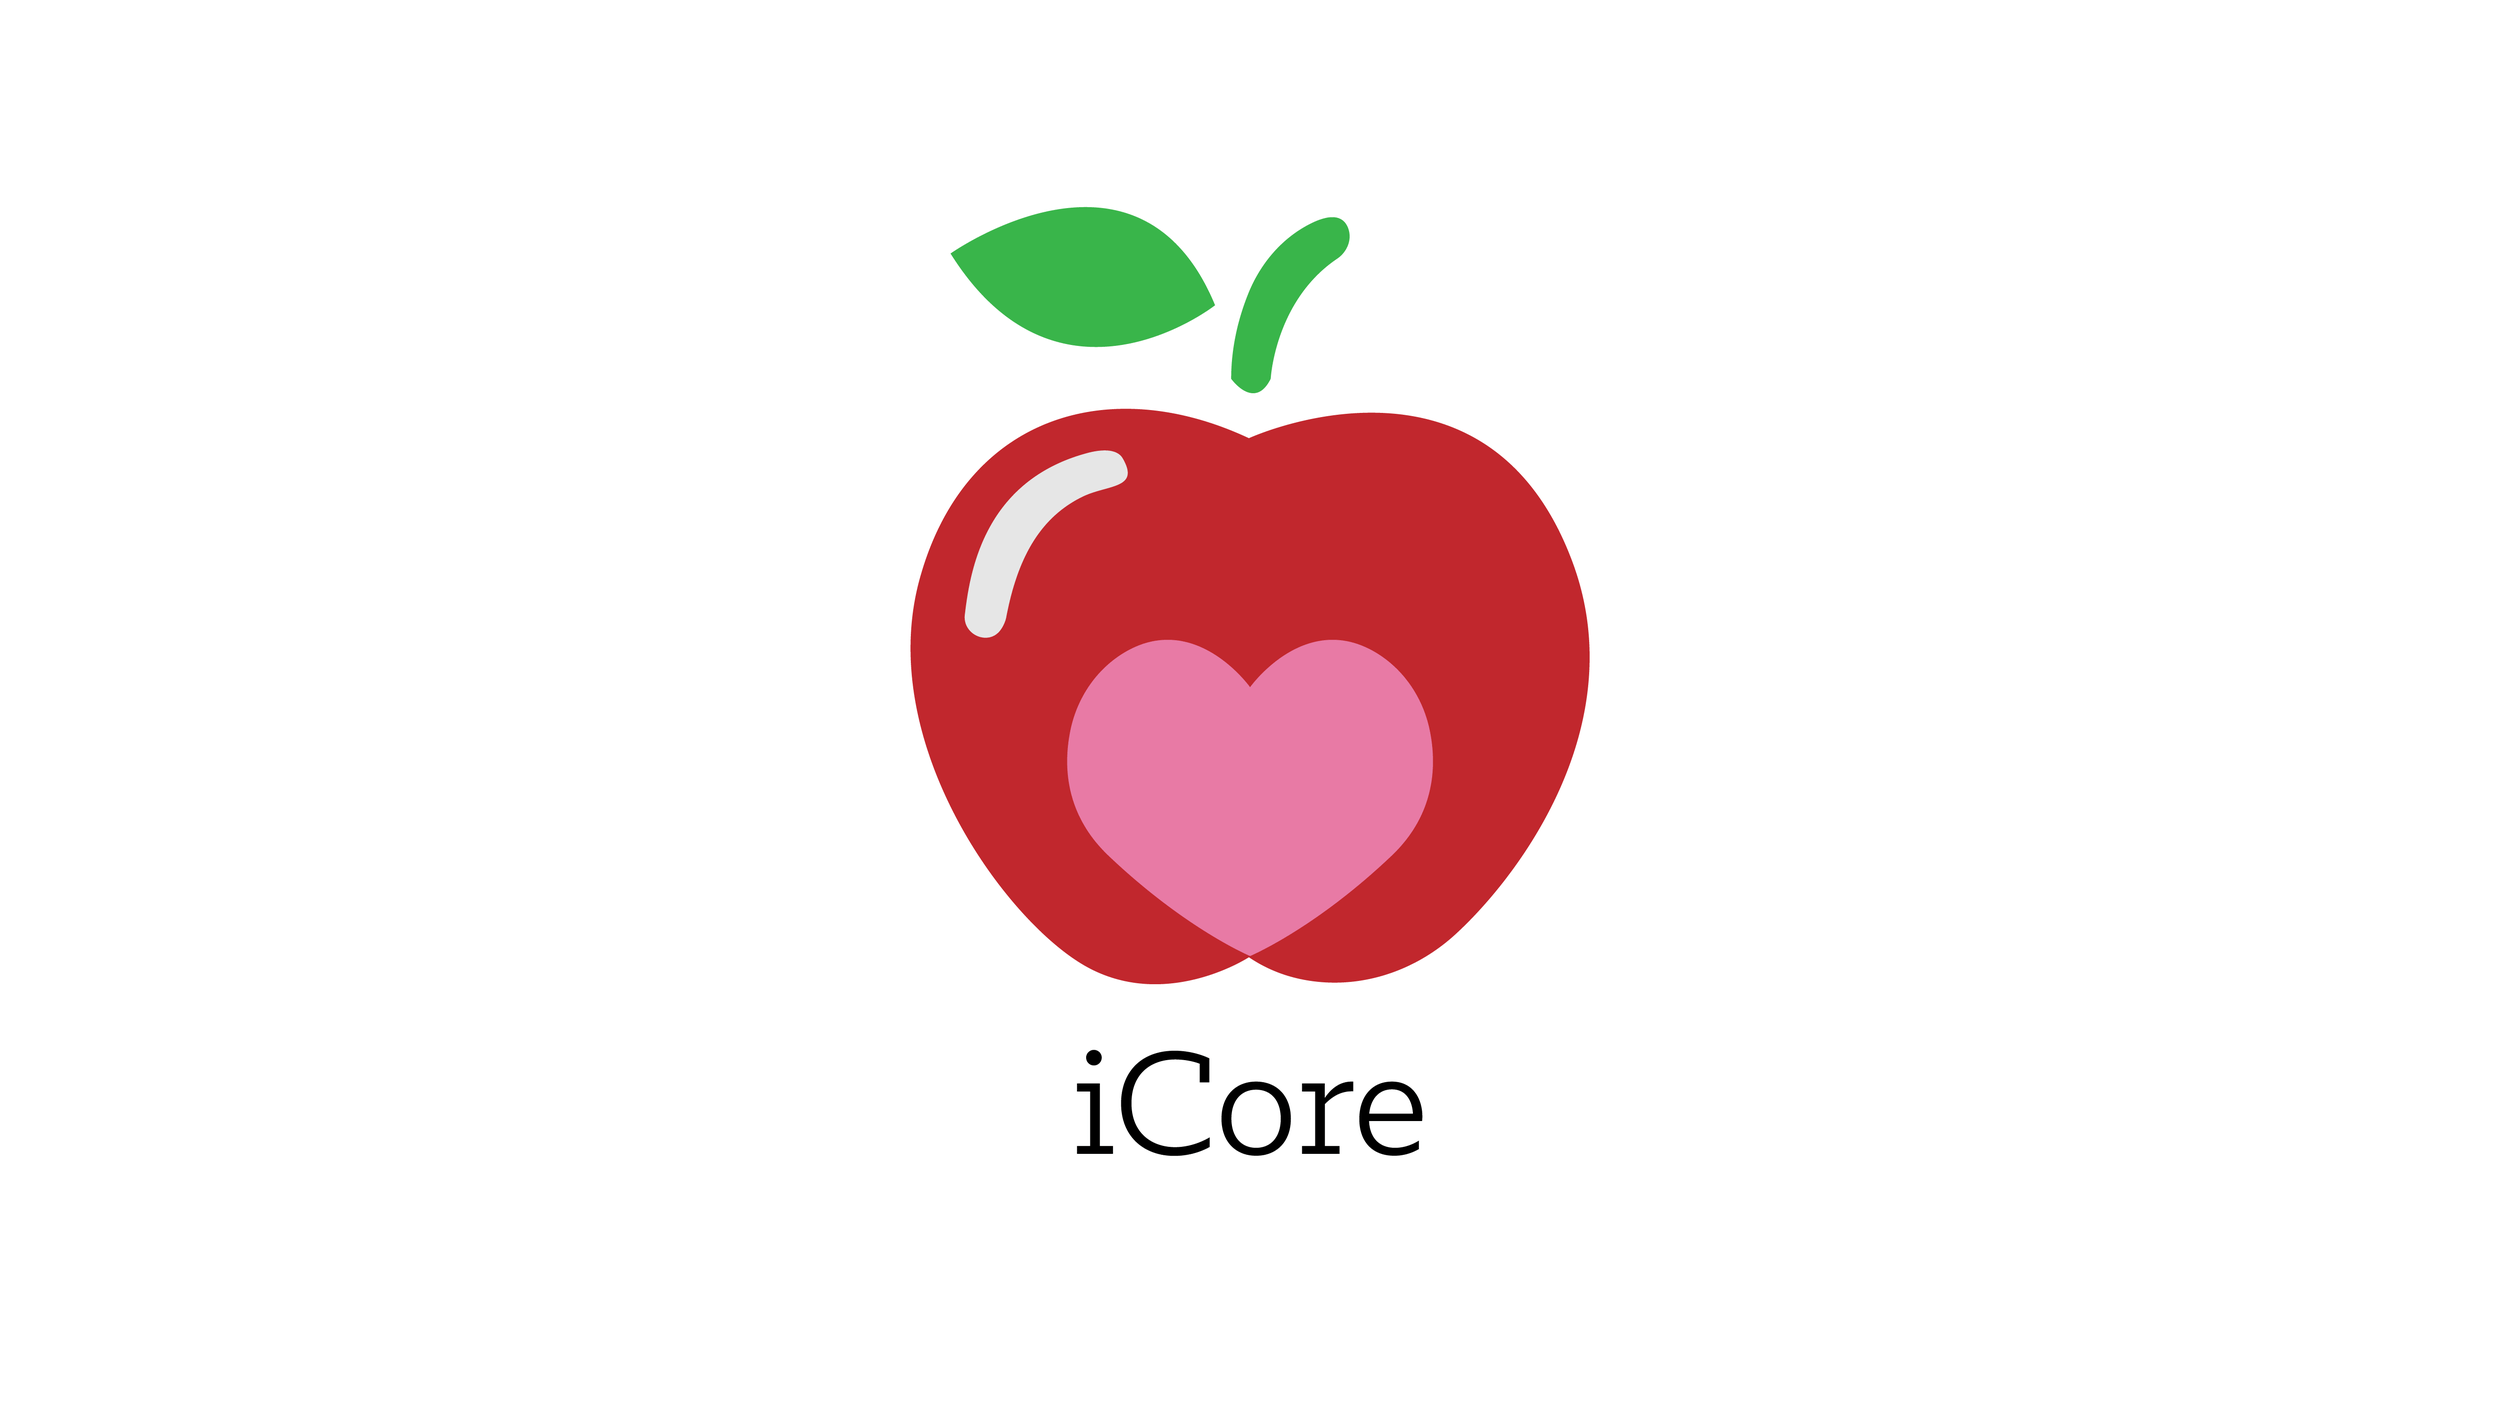 iCore Logo - iCore — Samantha Pintado